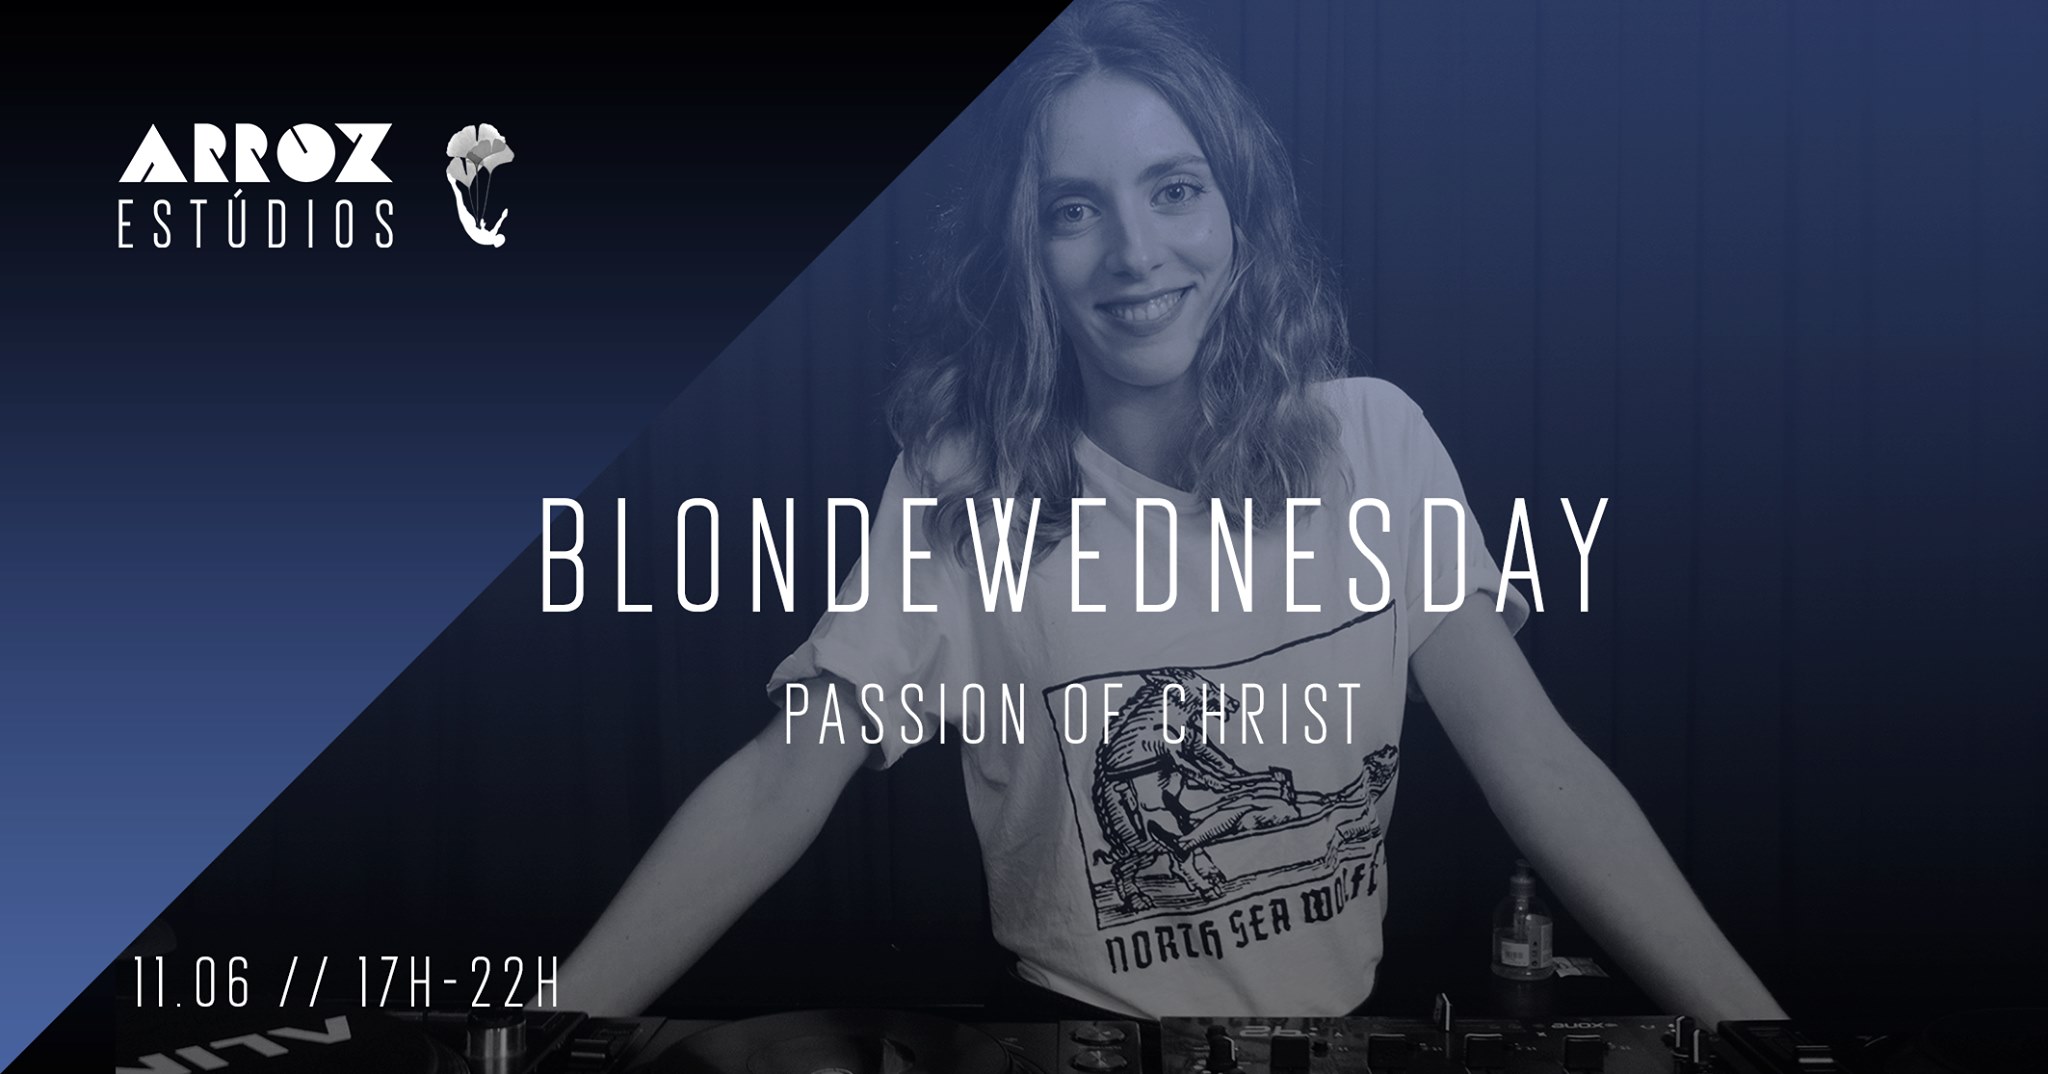 Blondewednesday - Passion of Christ